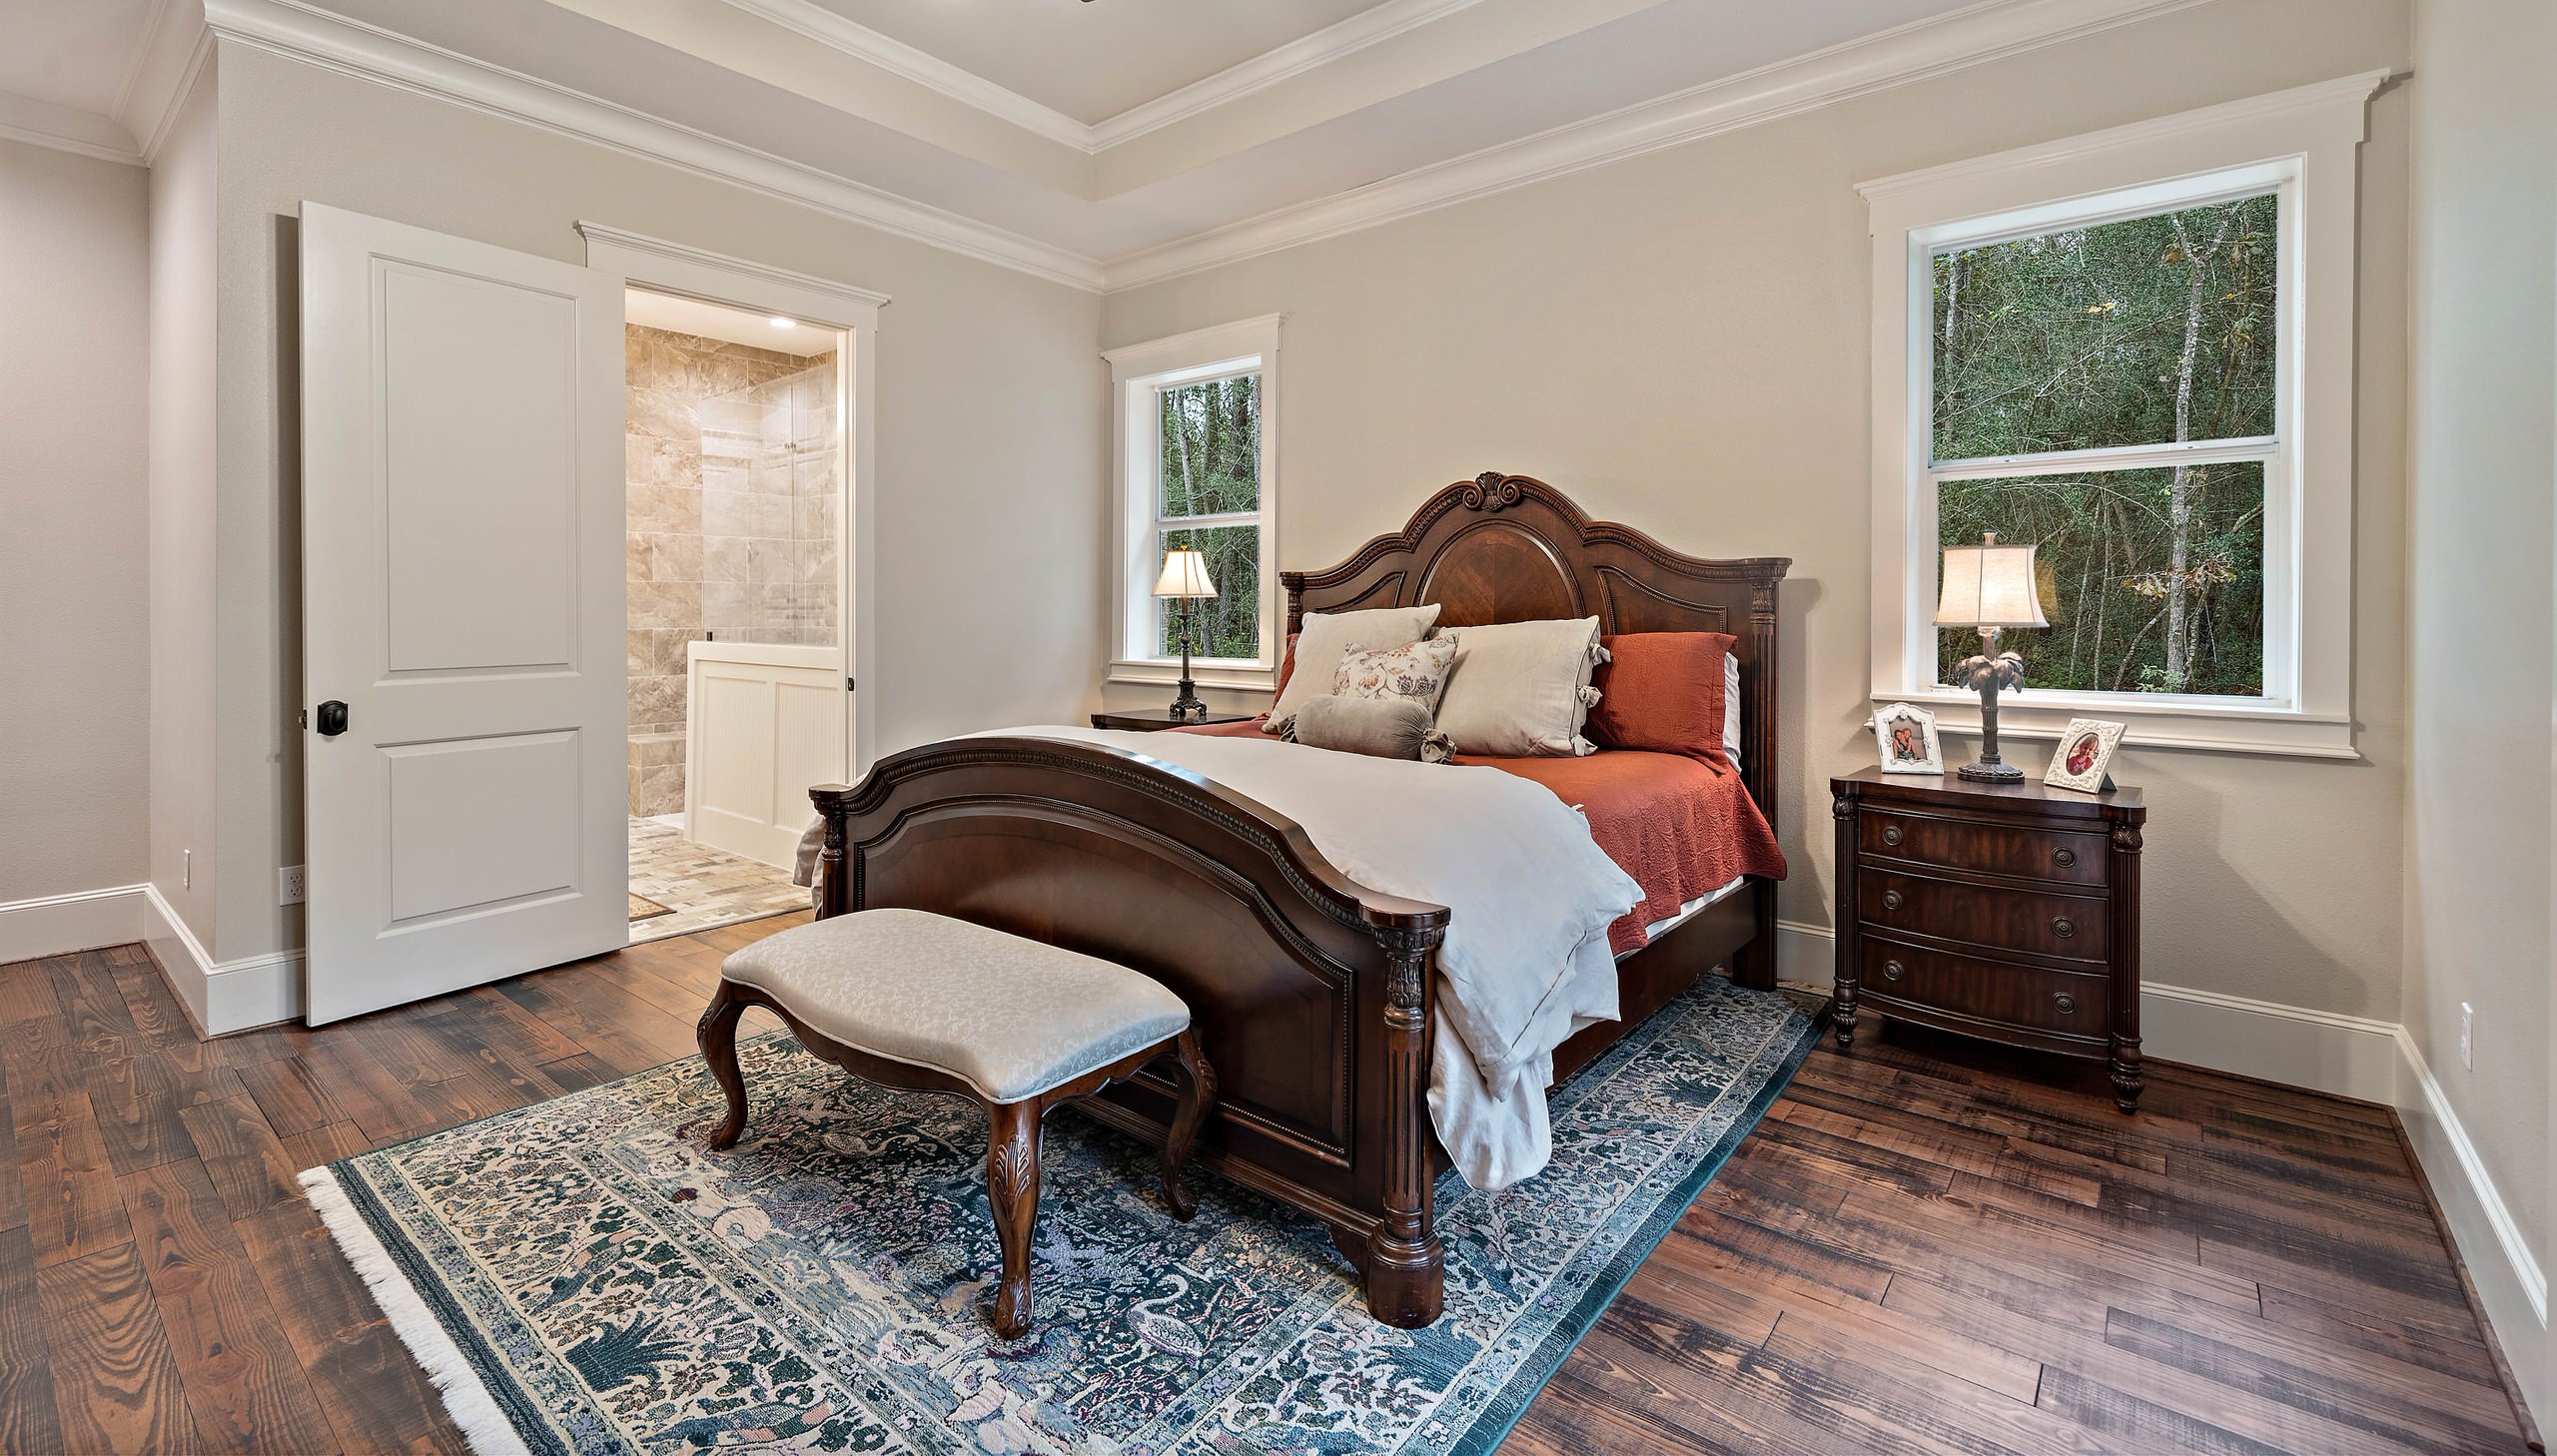 75 Brown Floor Bedroom Ideas You Ll